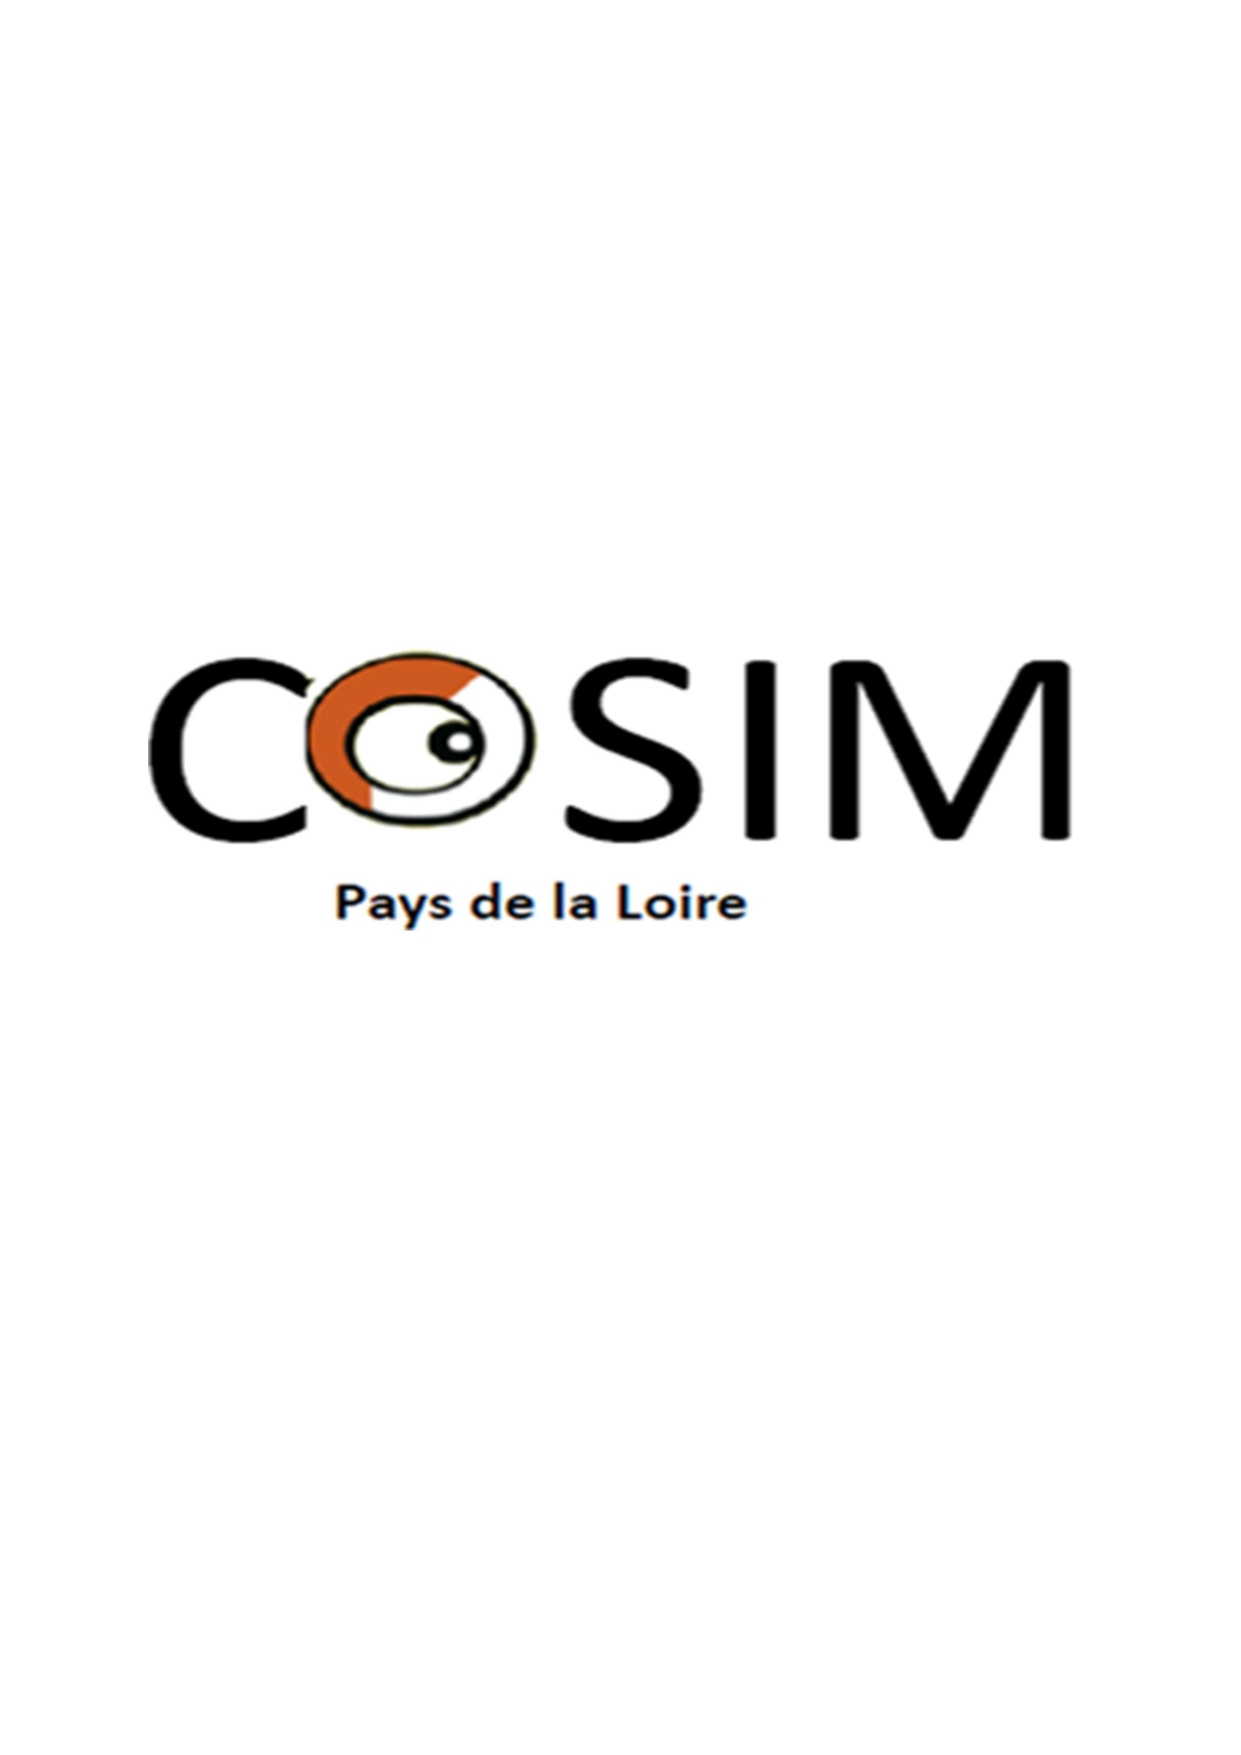 COSIM Pays de la Loire